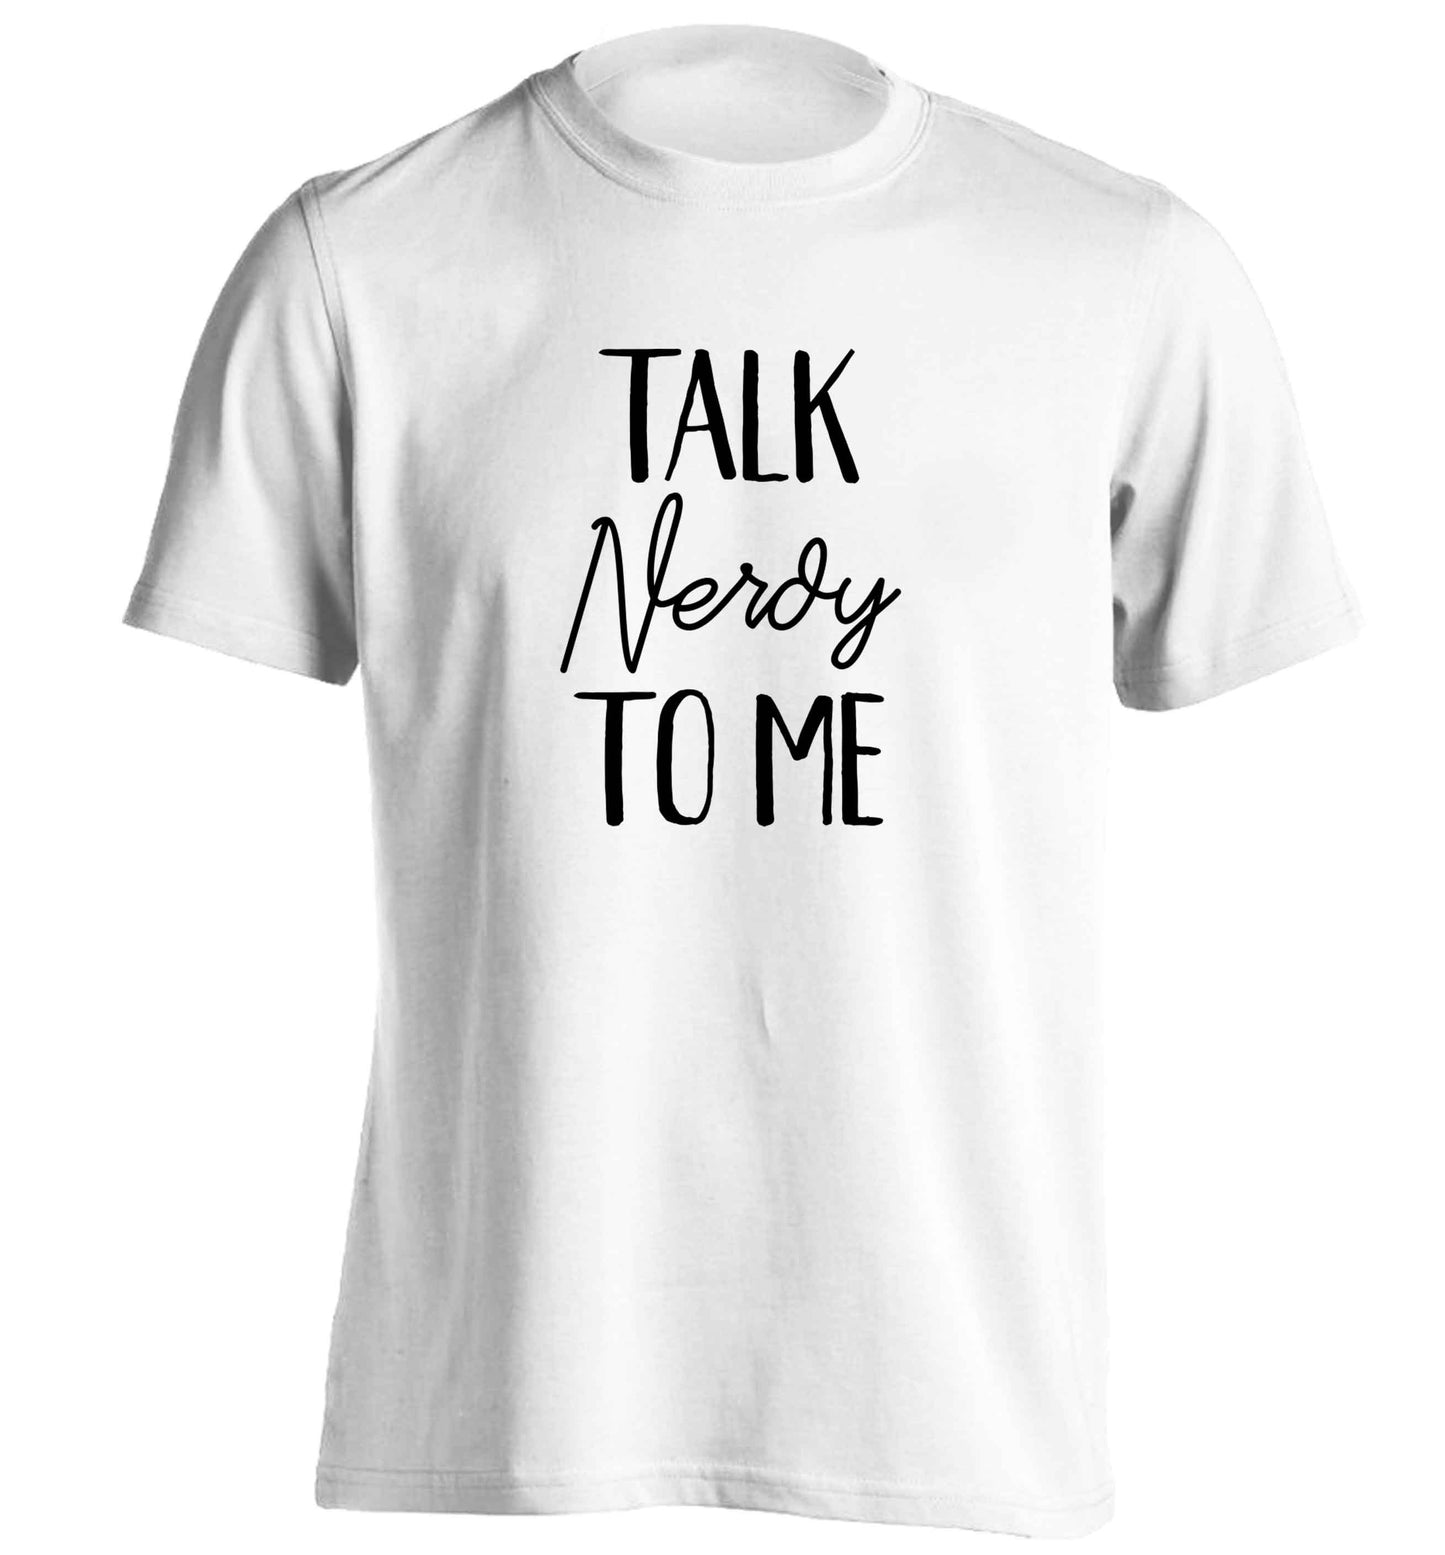 Talk nerdy to me adults unisex white Tshirt 2XL